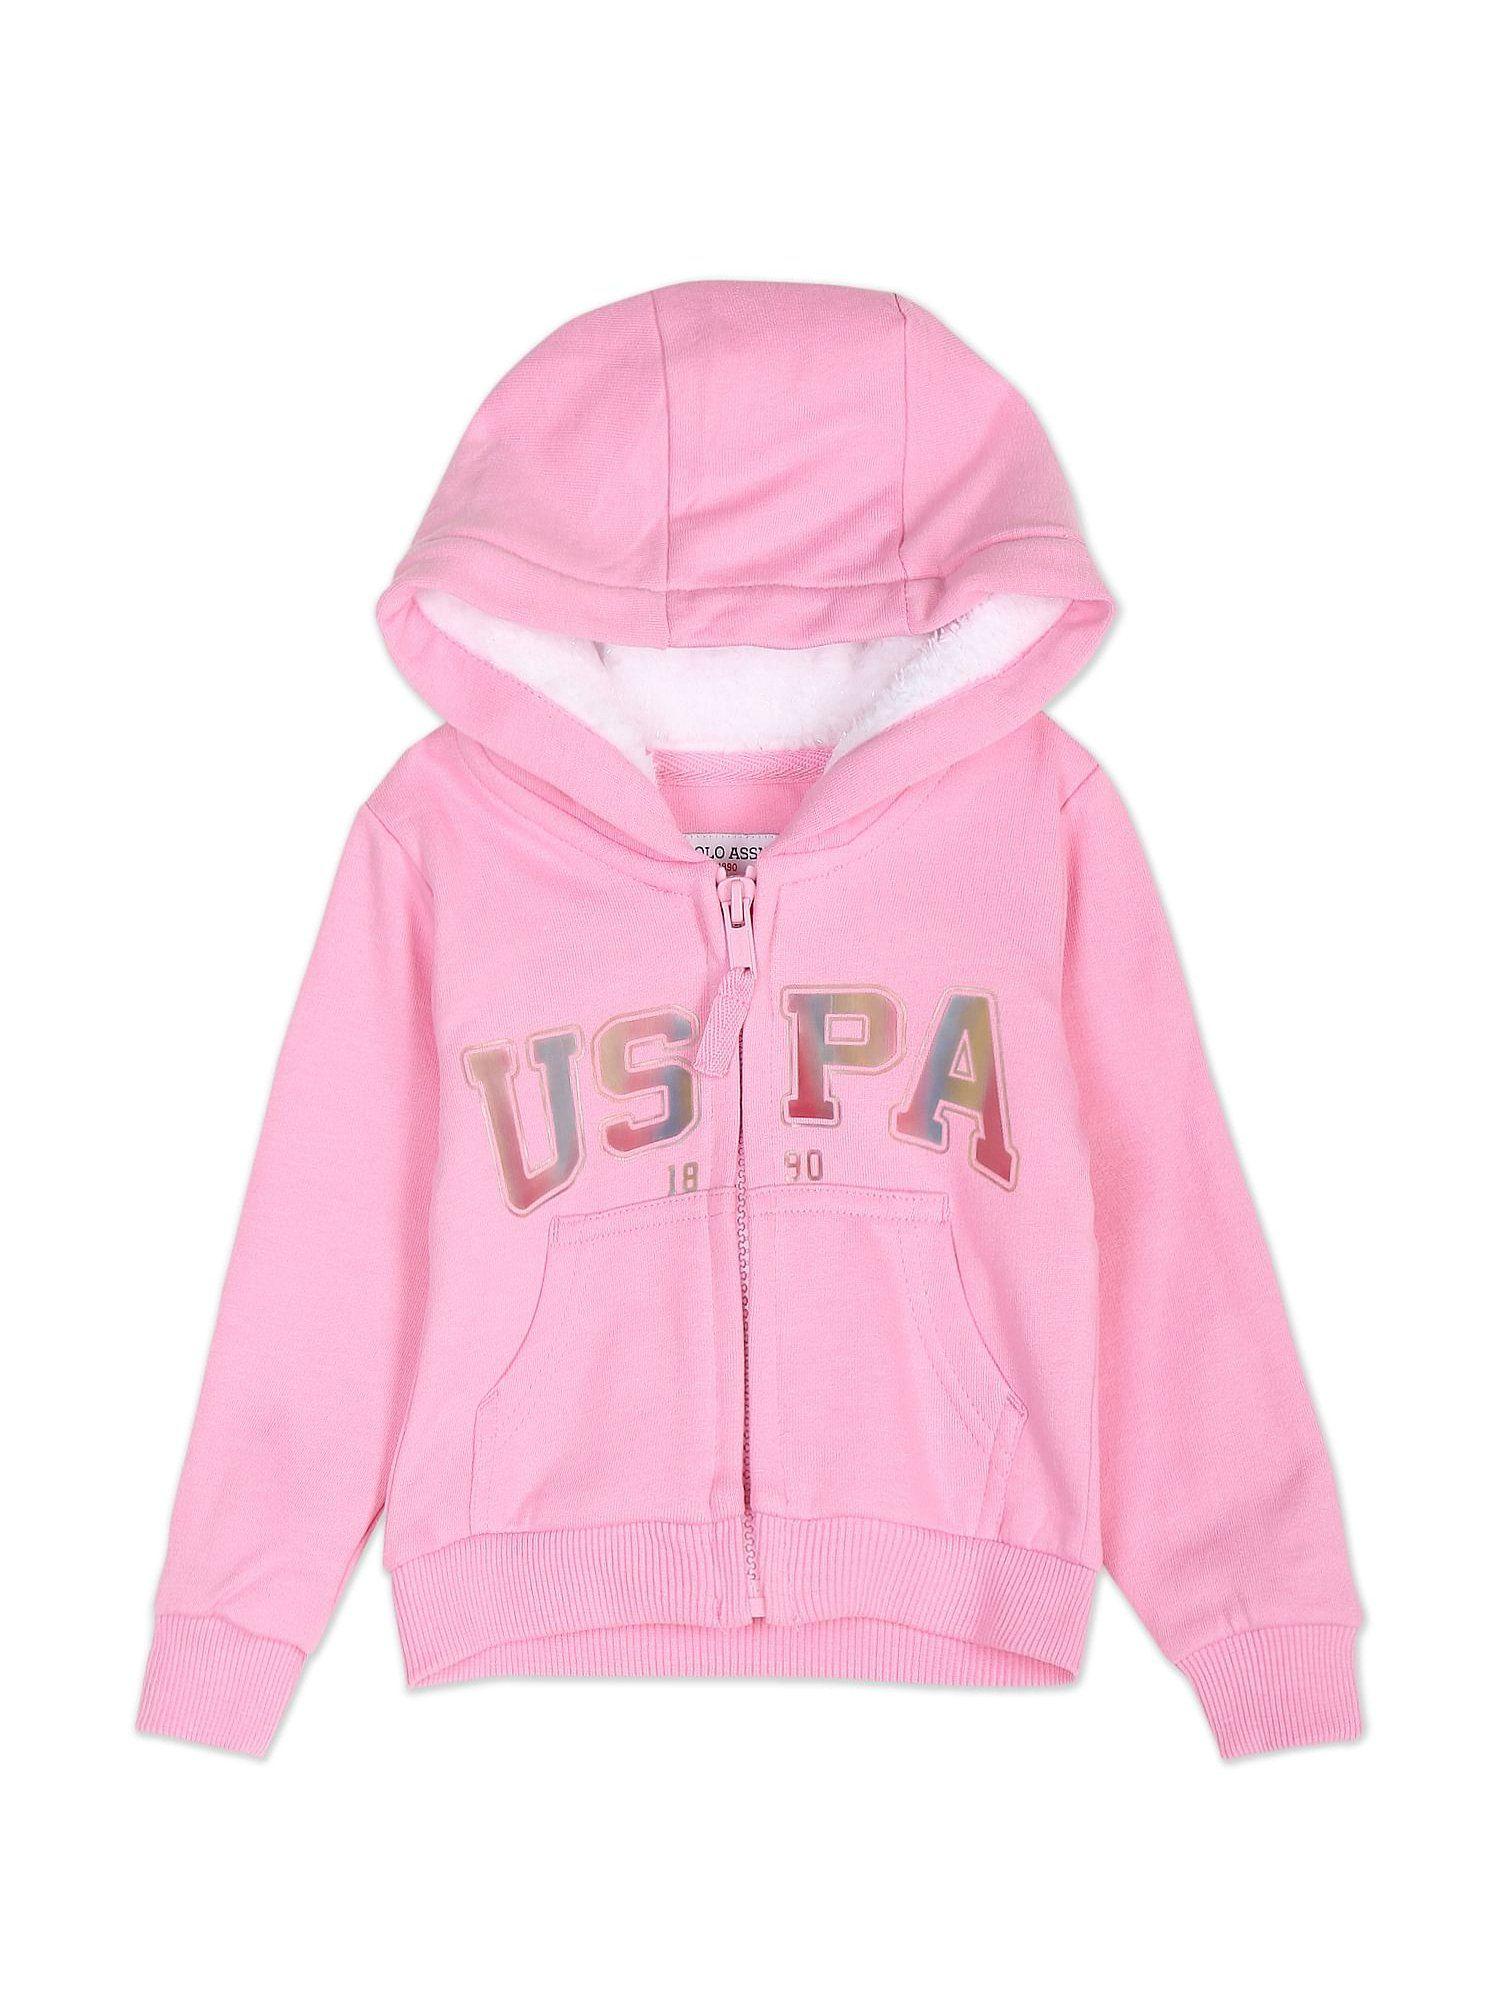 Girls Light Pink Graphic Print Hooded Sweatshirt